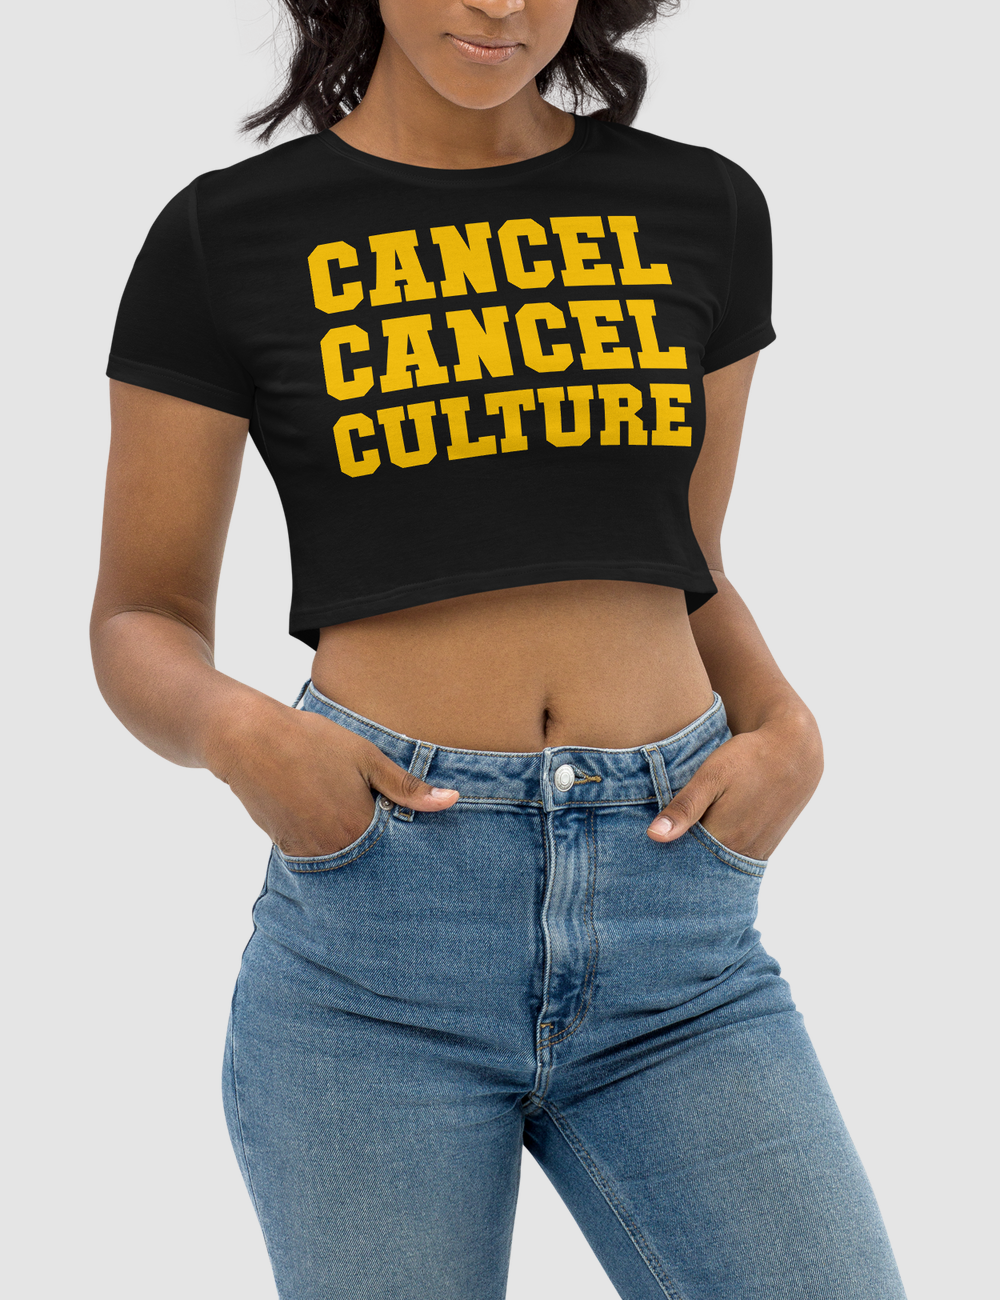 Cancel Cancel Culture | Women's Crop Top T-Shirt OniTakai